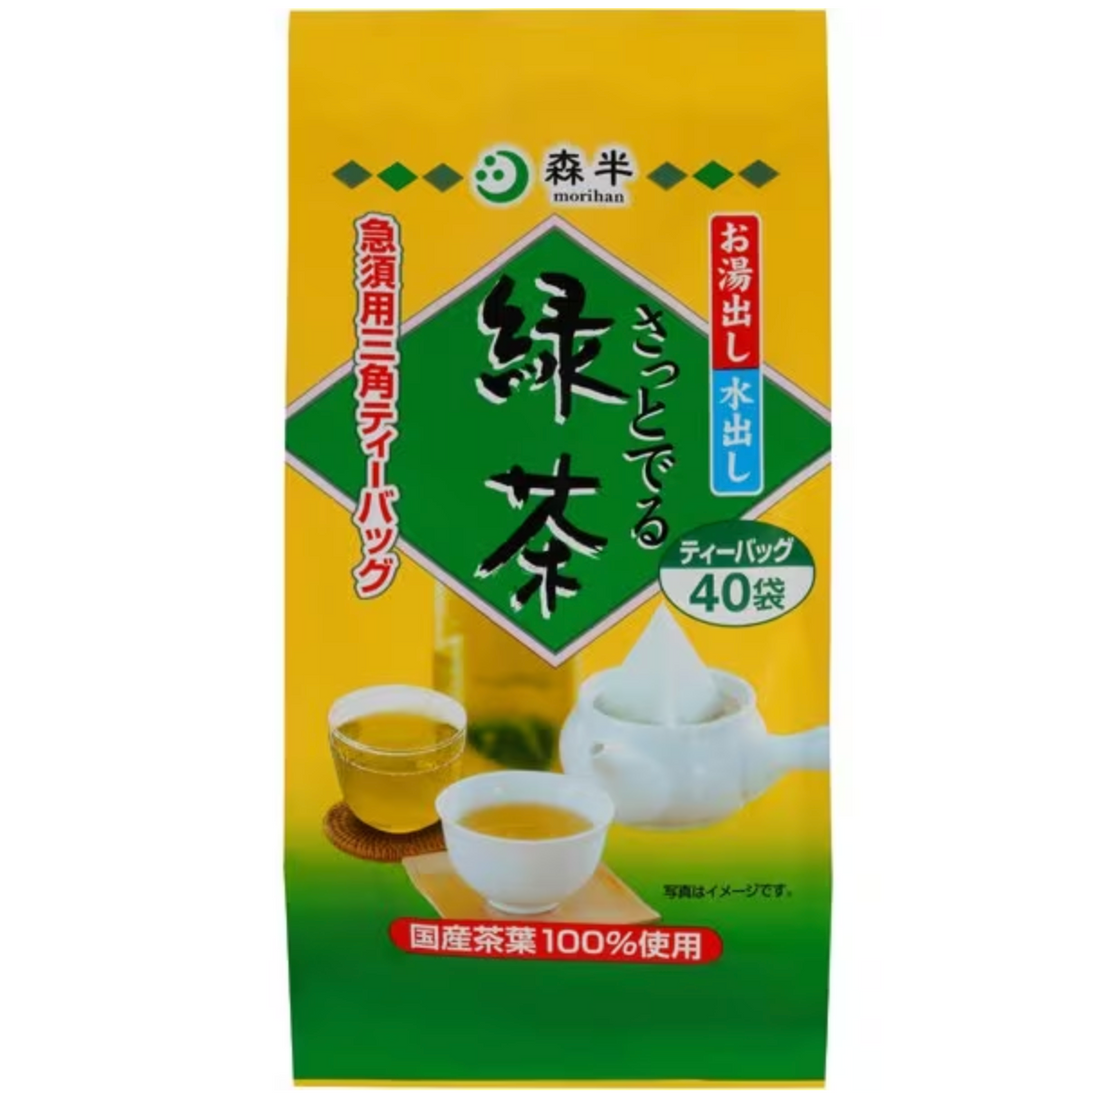 Morihan Quick Green Tea (4g x 40P) 160g